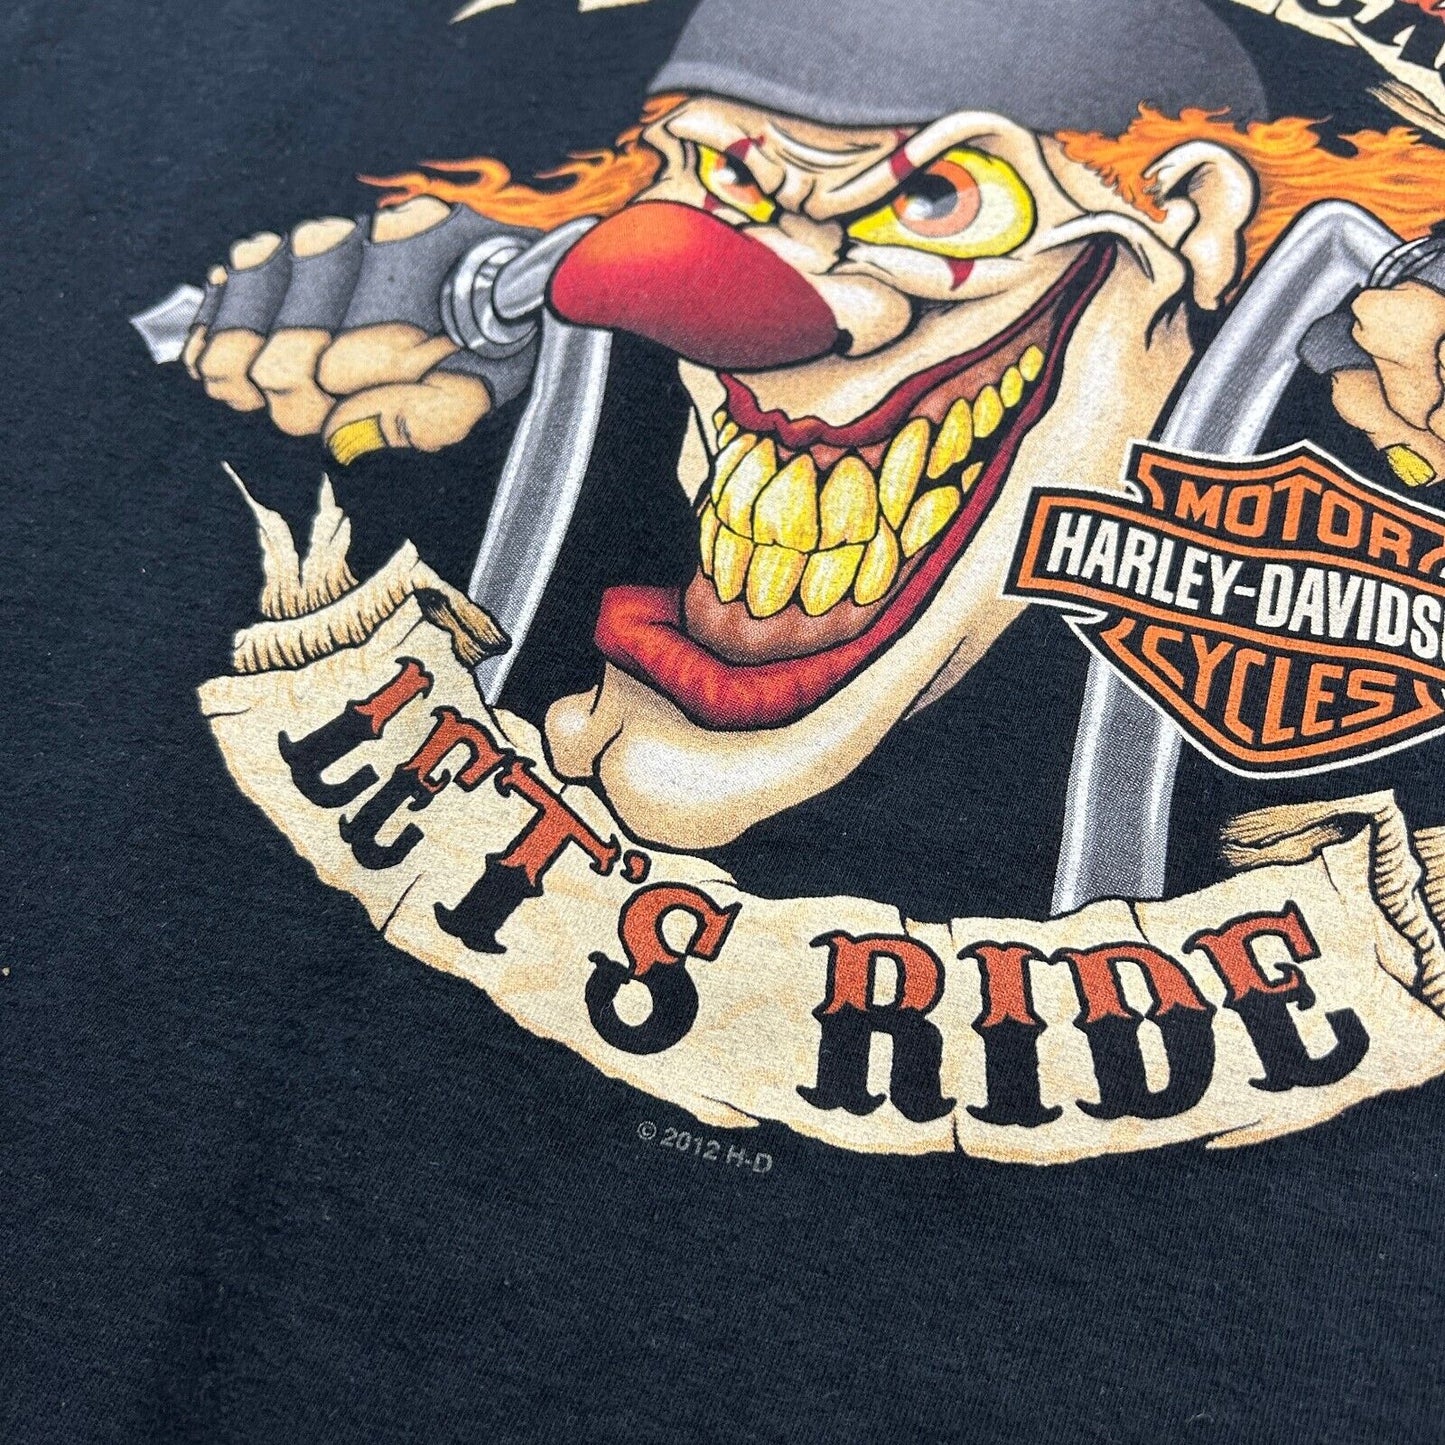 HARLEY DAVIDSON Motor Cycles Work Sucks Lets Ride NJ Biker T-Shirt sz XL Adult